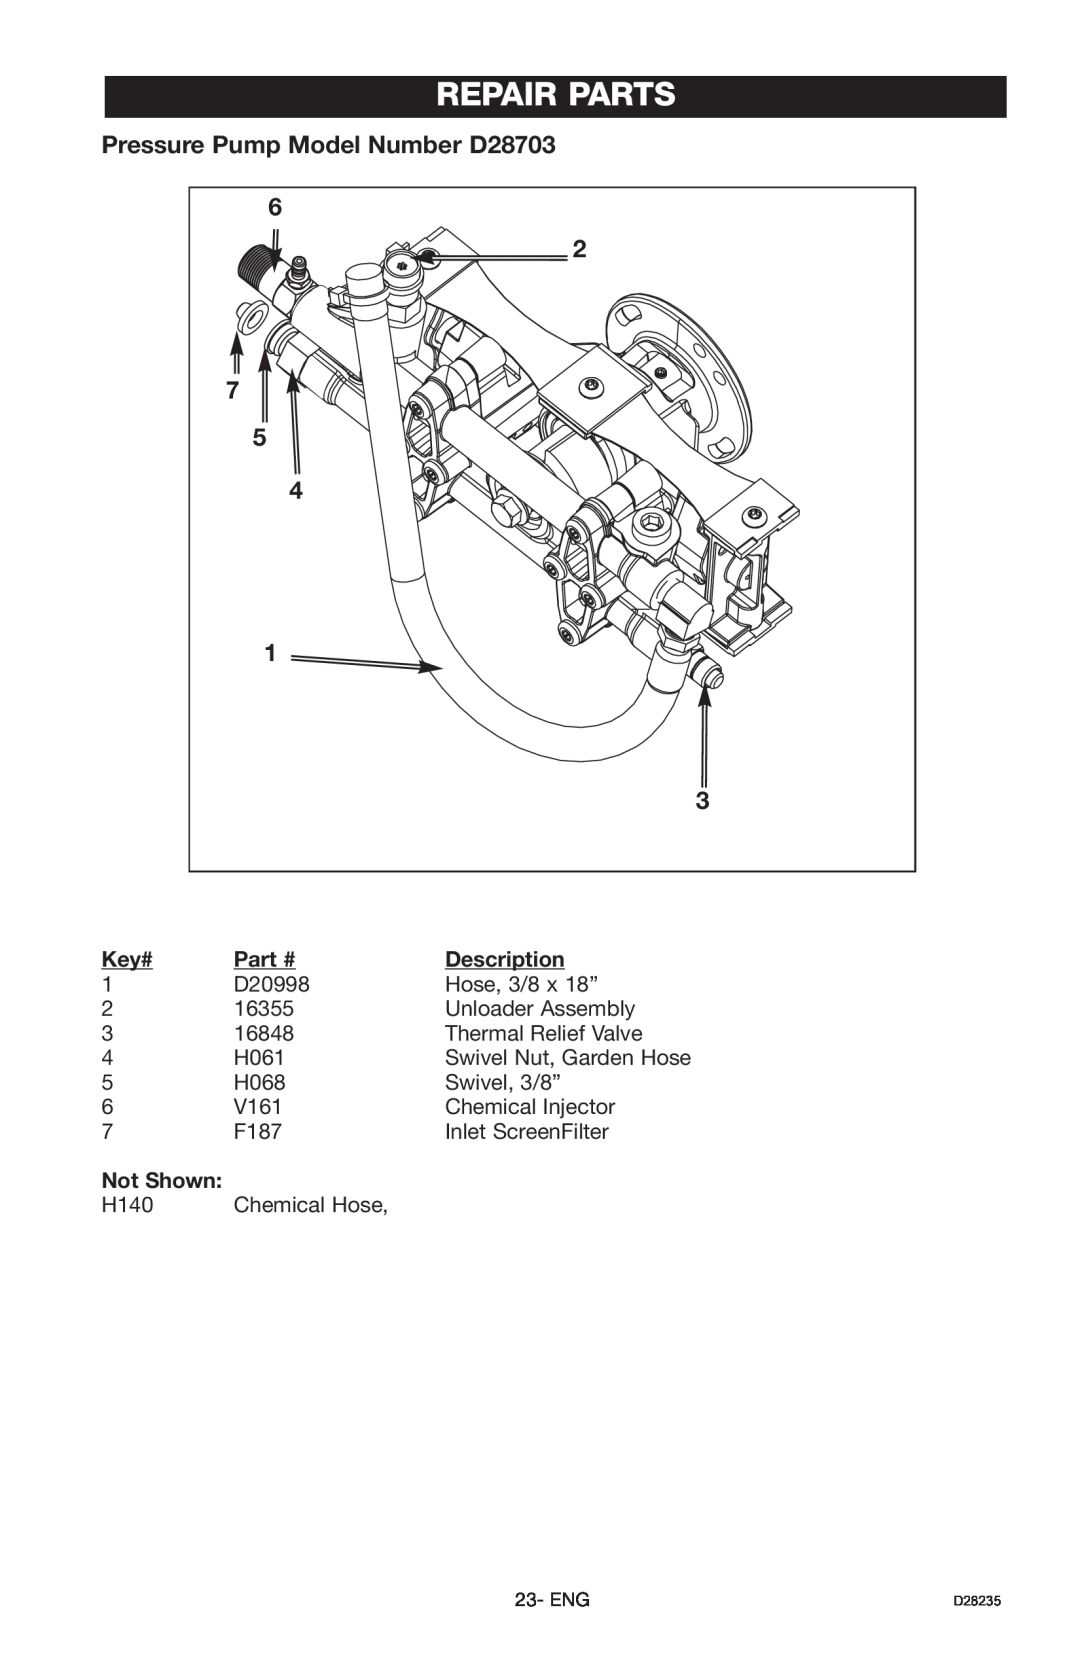 Craftsman 919.672241, D28235 owner manual Repair Parts, Key#, Description, Not Shown 